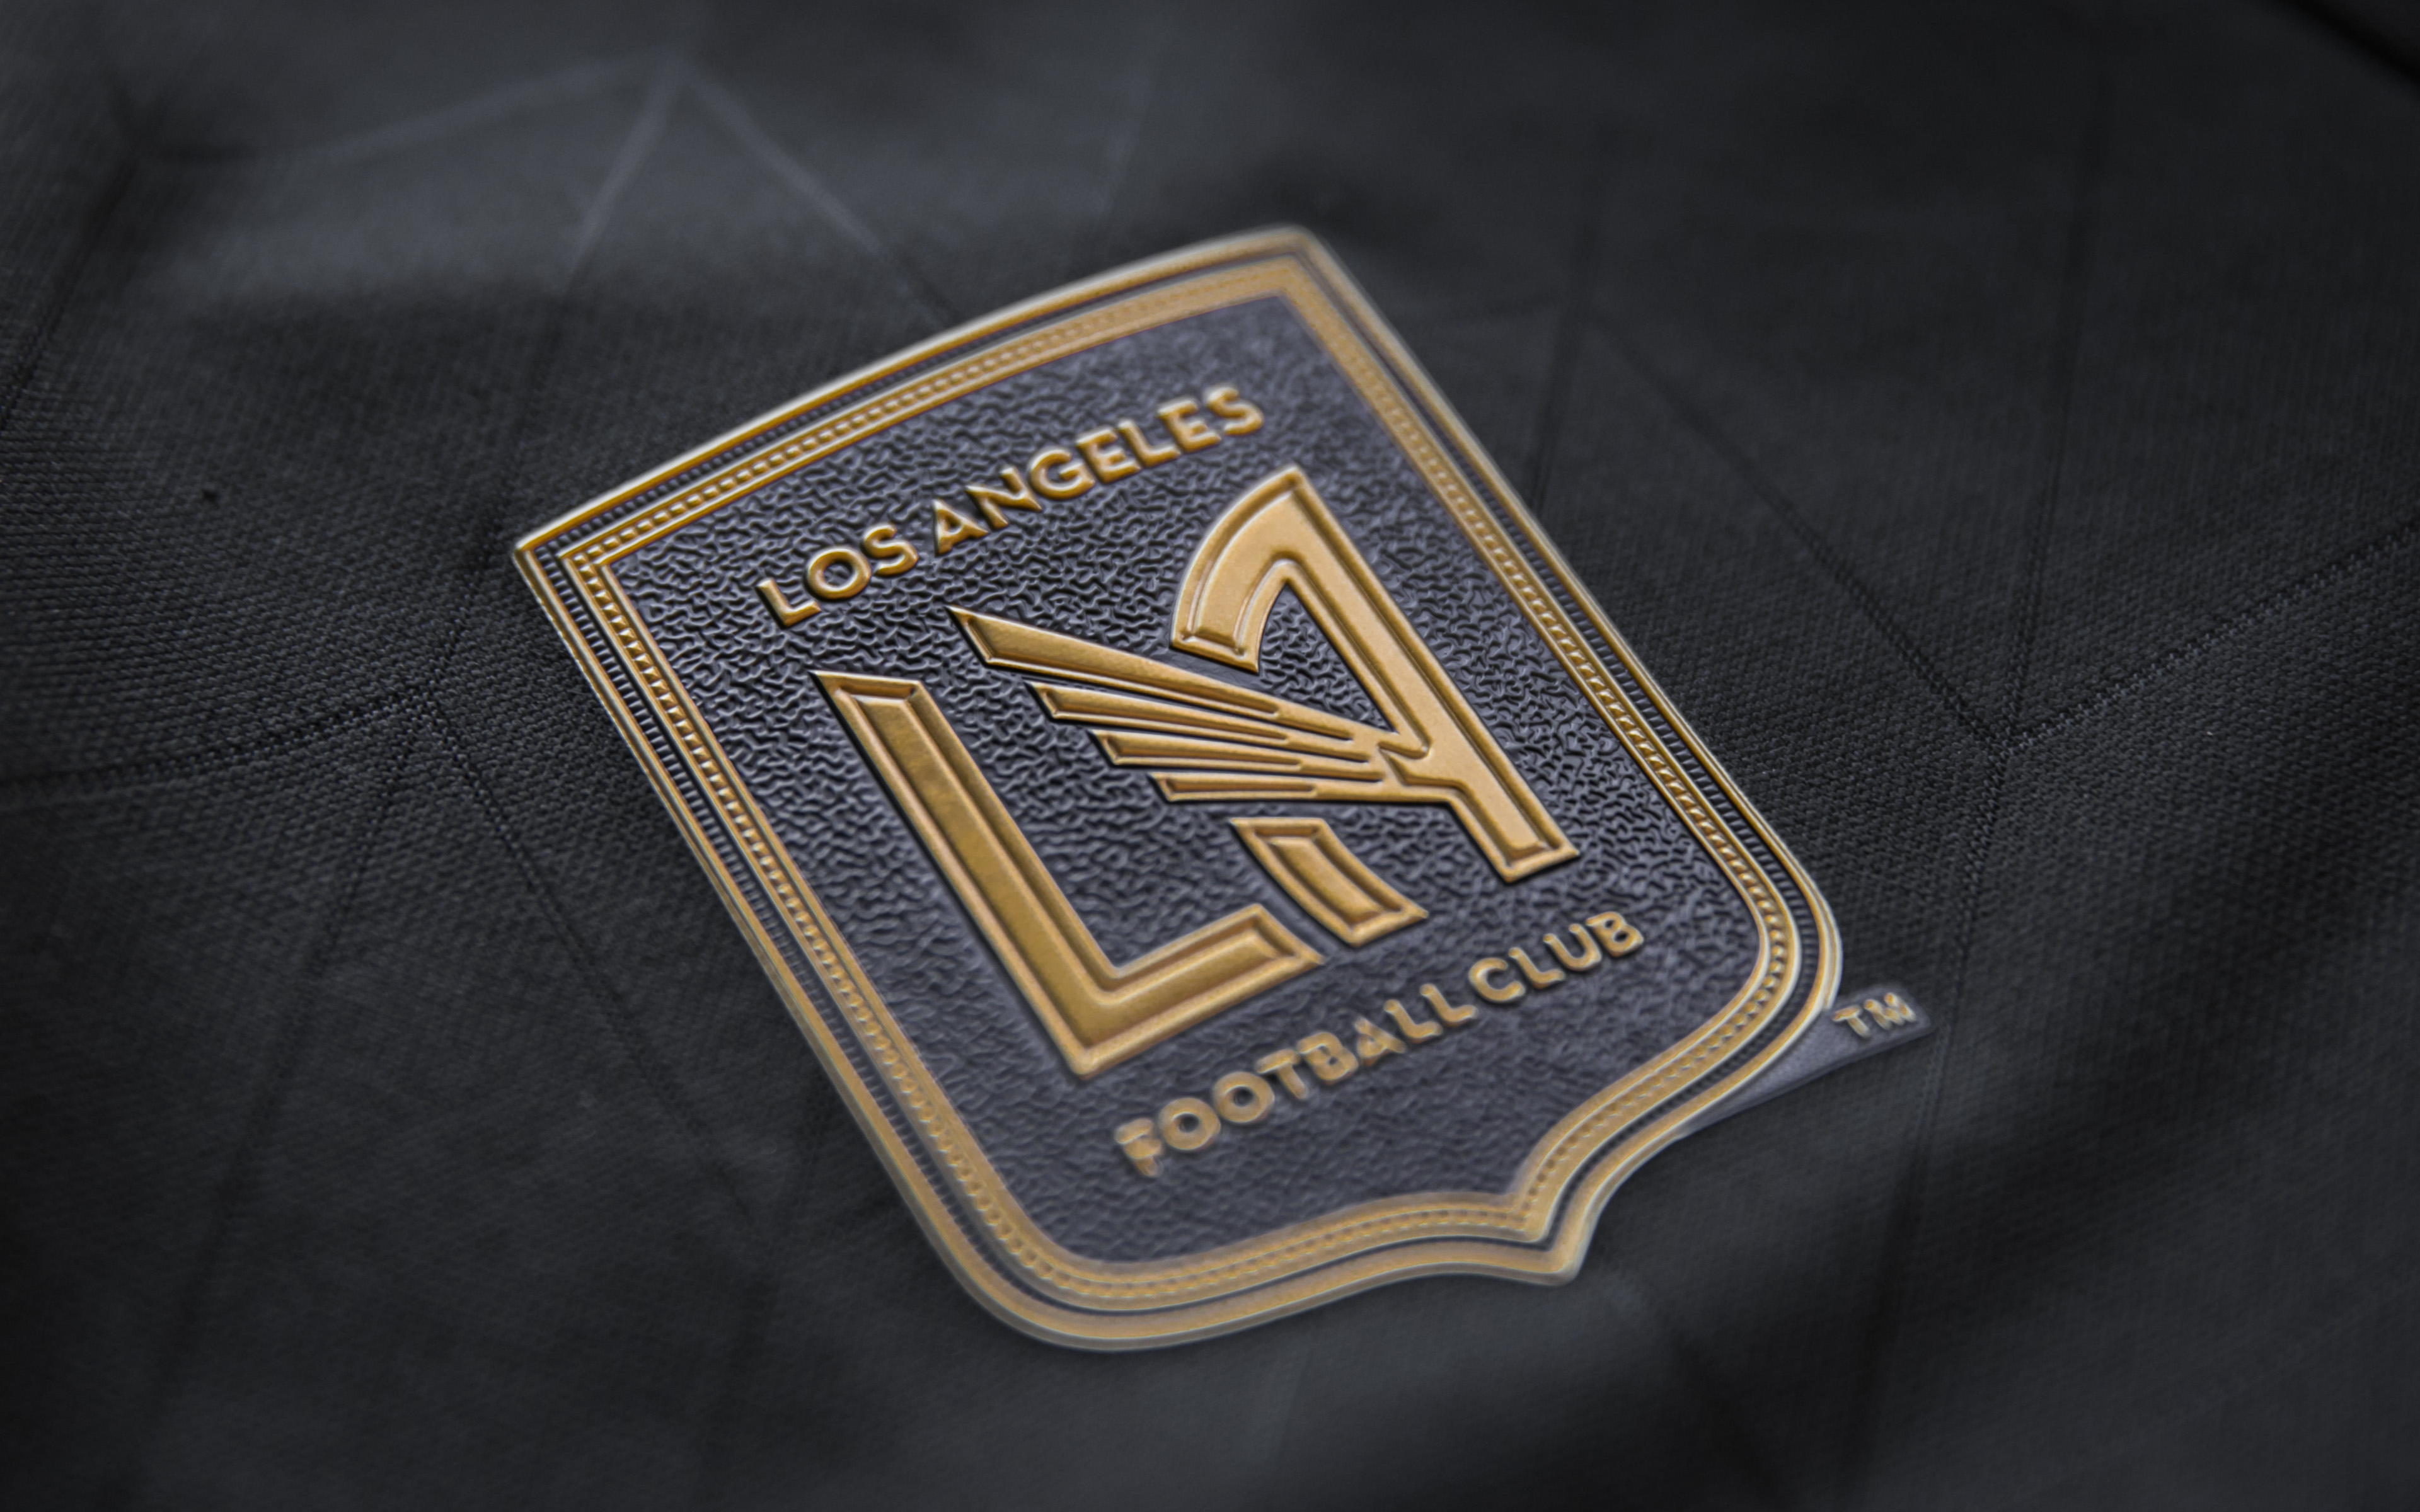 Los Angeles Football Club Logo 4k Ultra HD Wallpaper Background